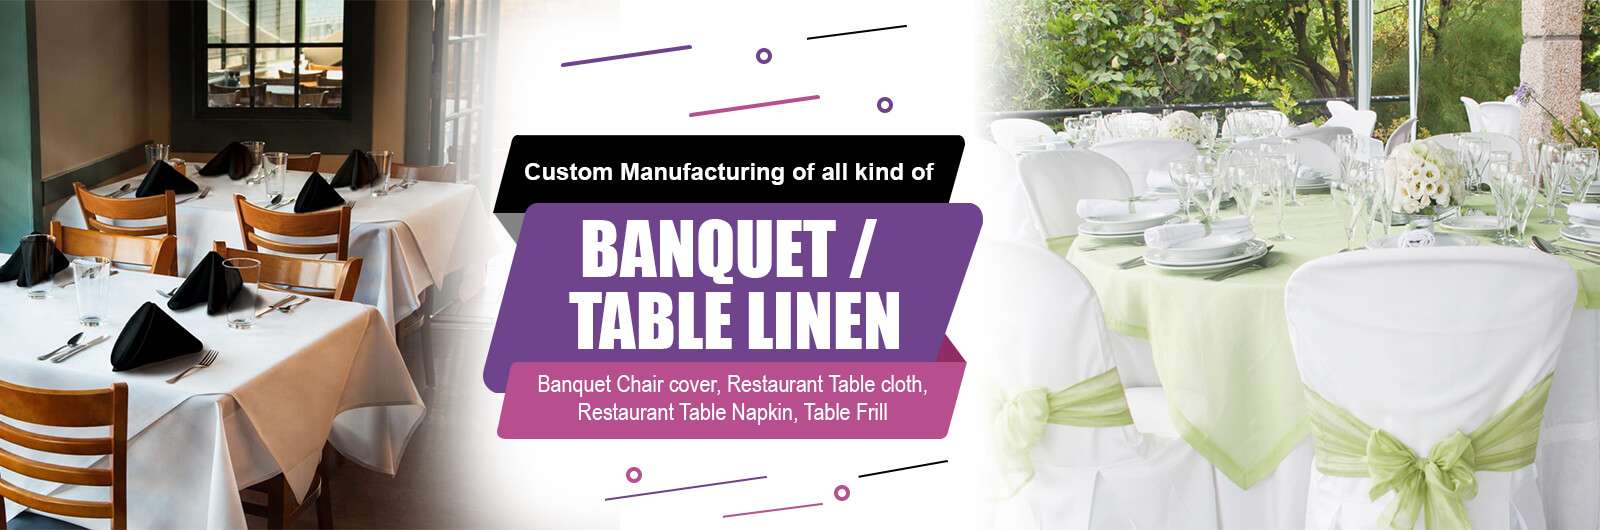 Banquet Table Linen 1